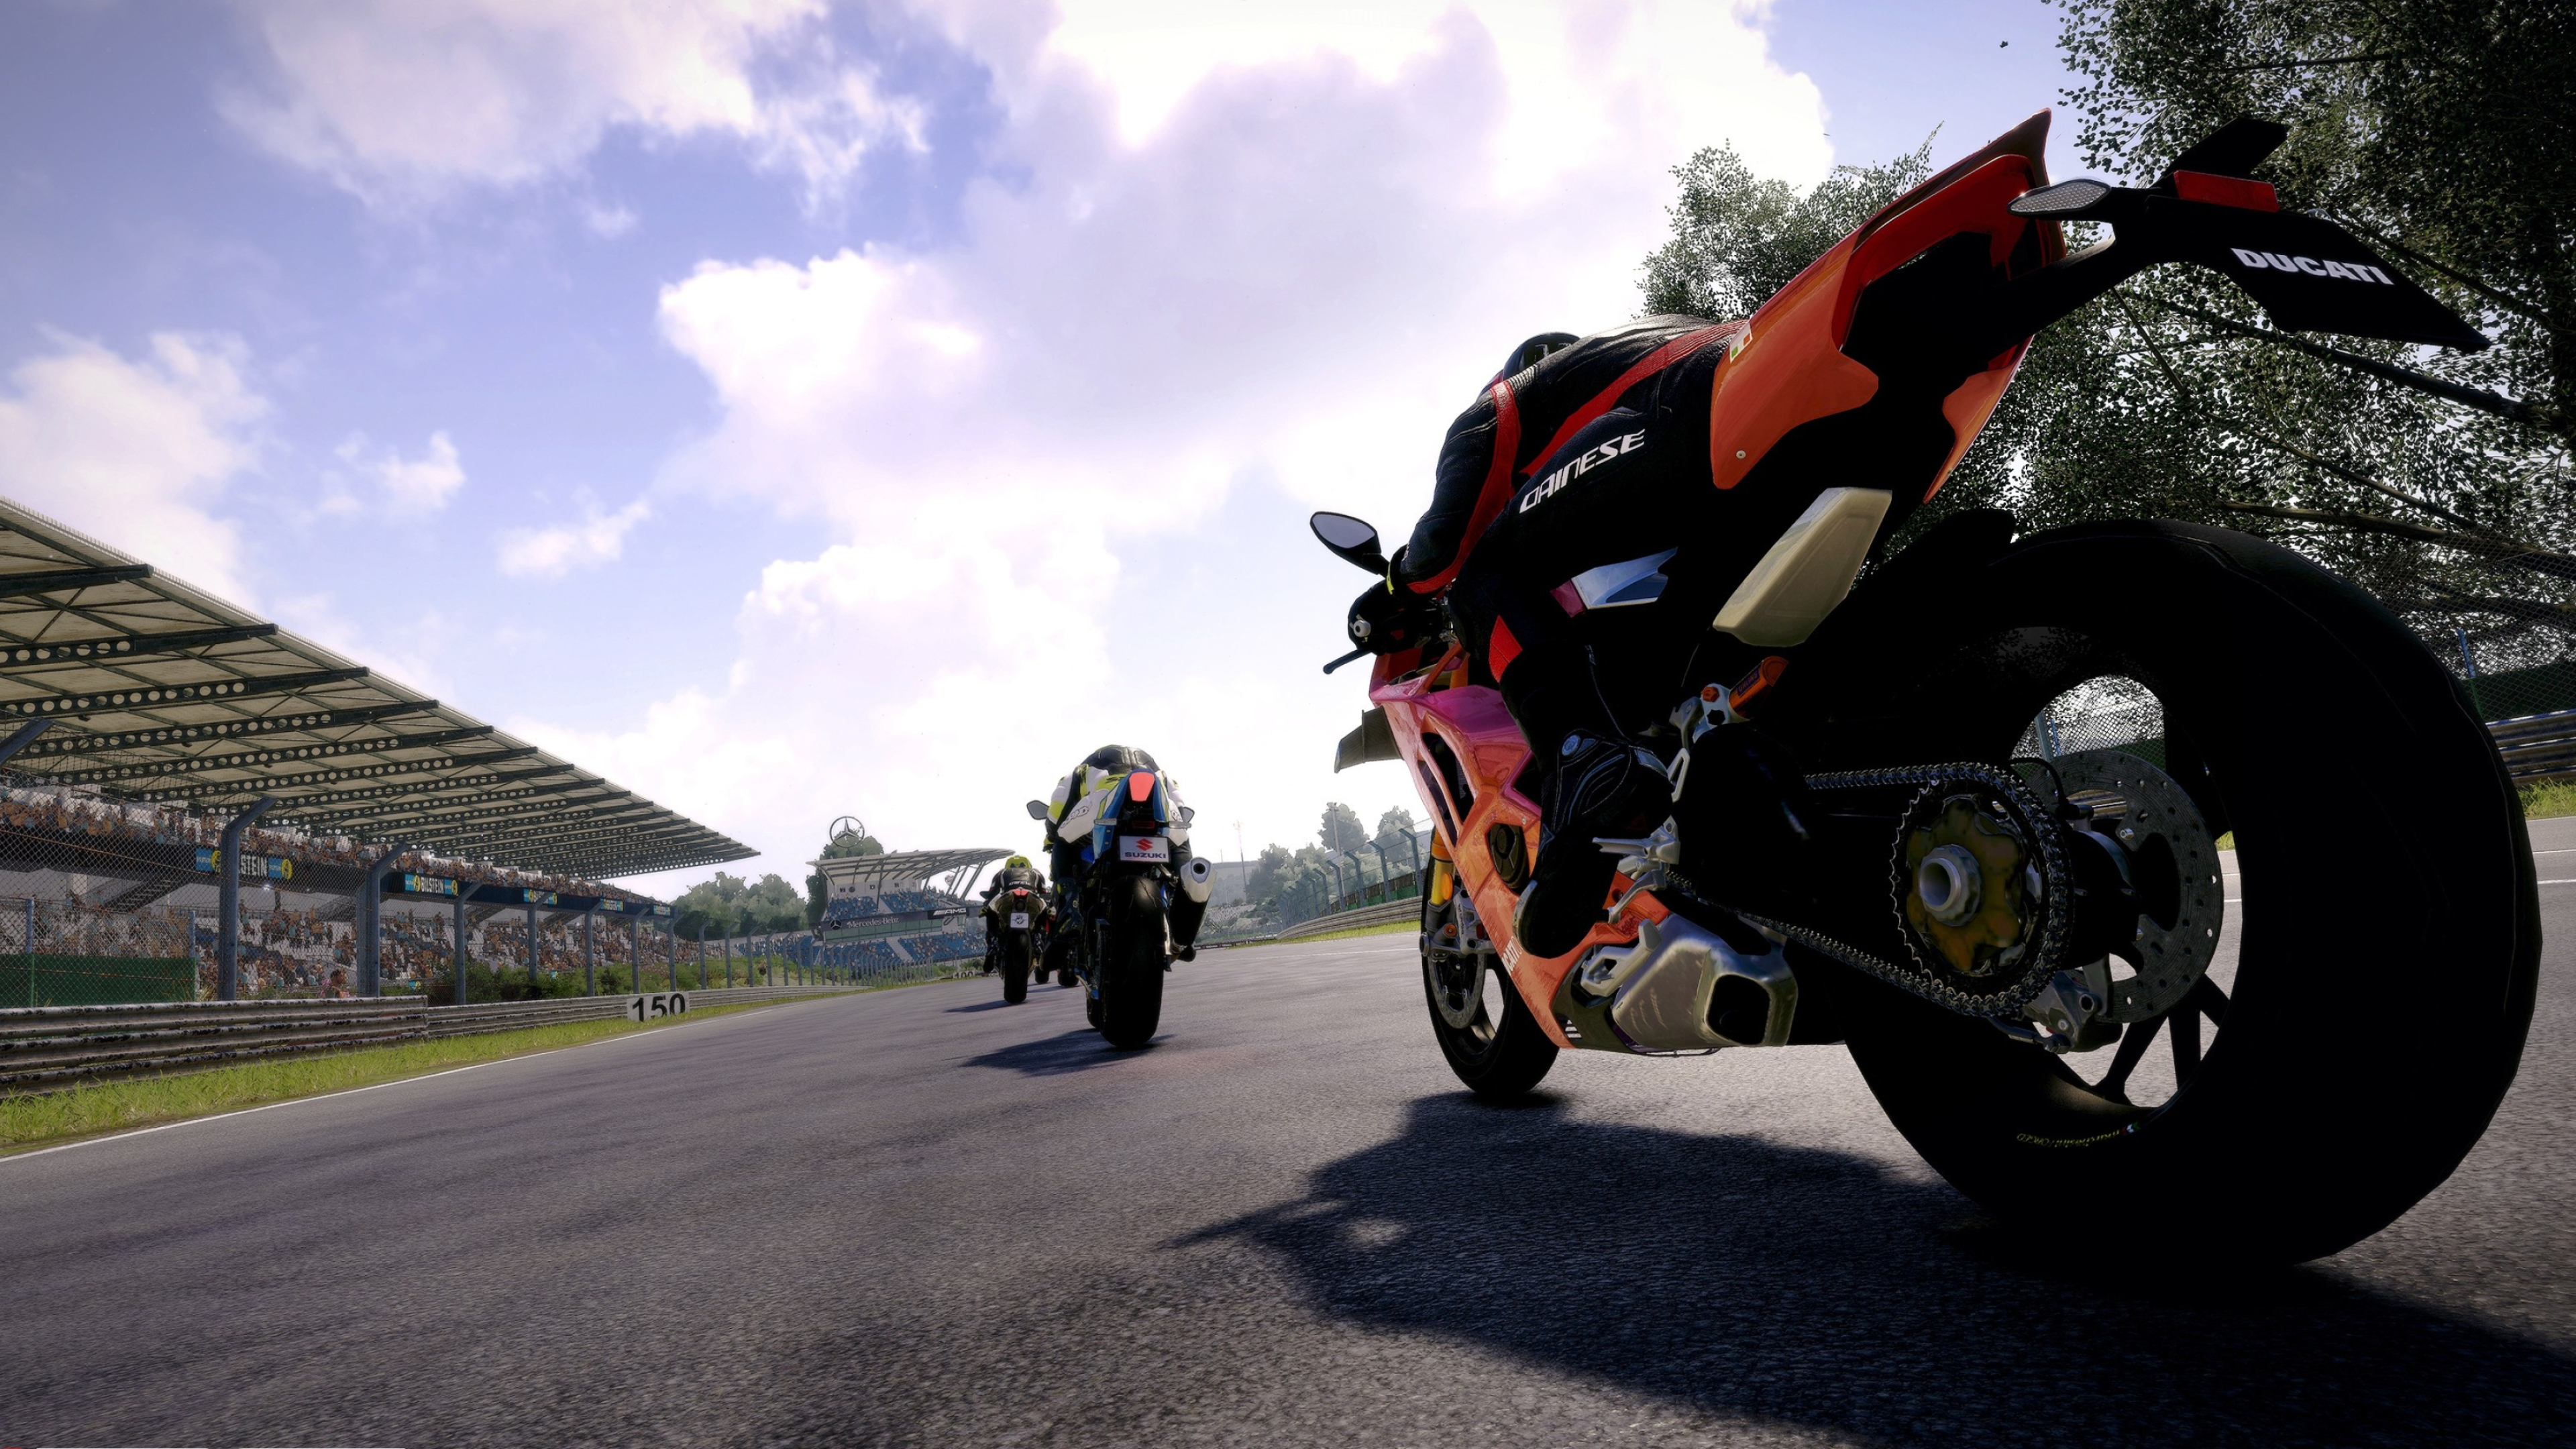 Motorcycle Racing: RIMS Racing, Sports Simulator Video Game, RaceWard Studio, 2021, Ducati. 3840x2160 4K Background.